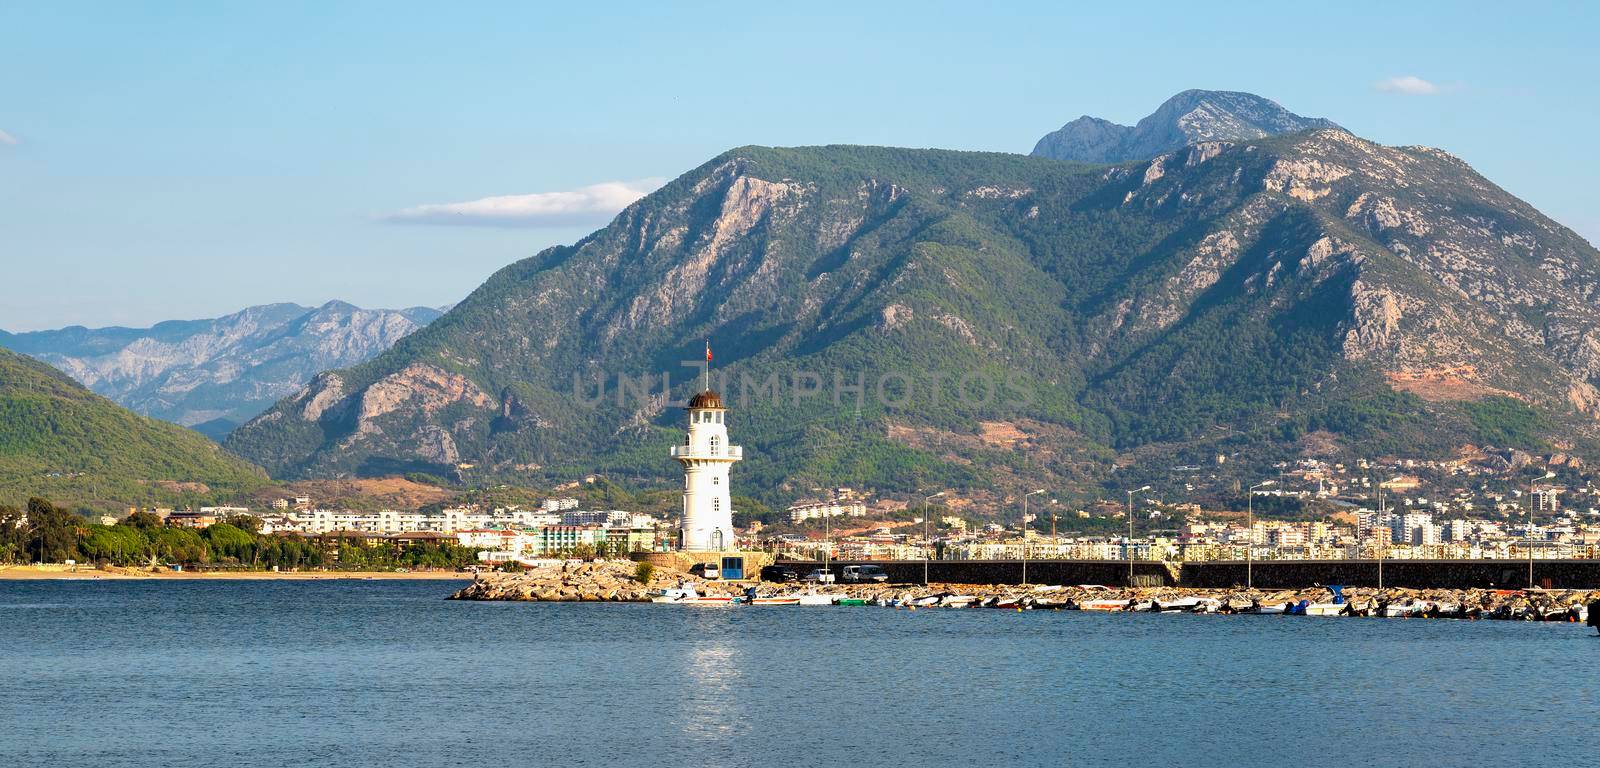 Turkey, Alanya - November 9, 2020: Lighthouse in port of Alanya. by Laguna781